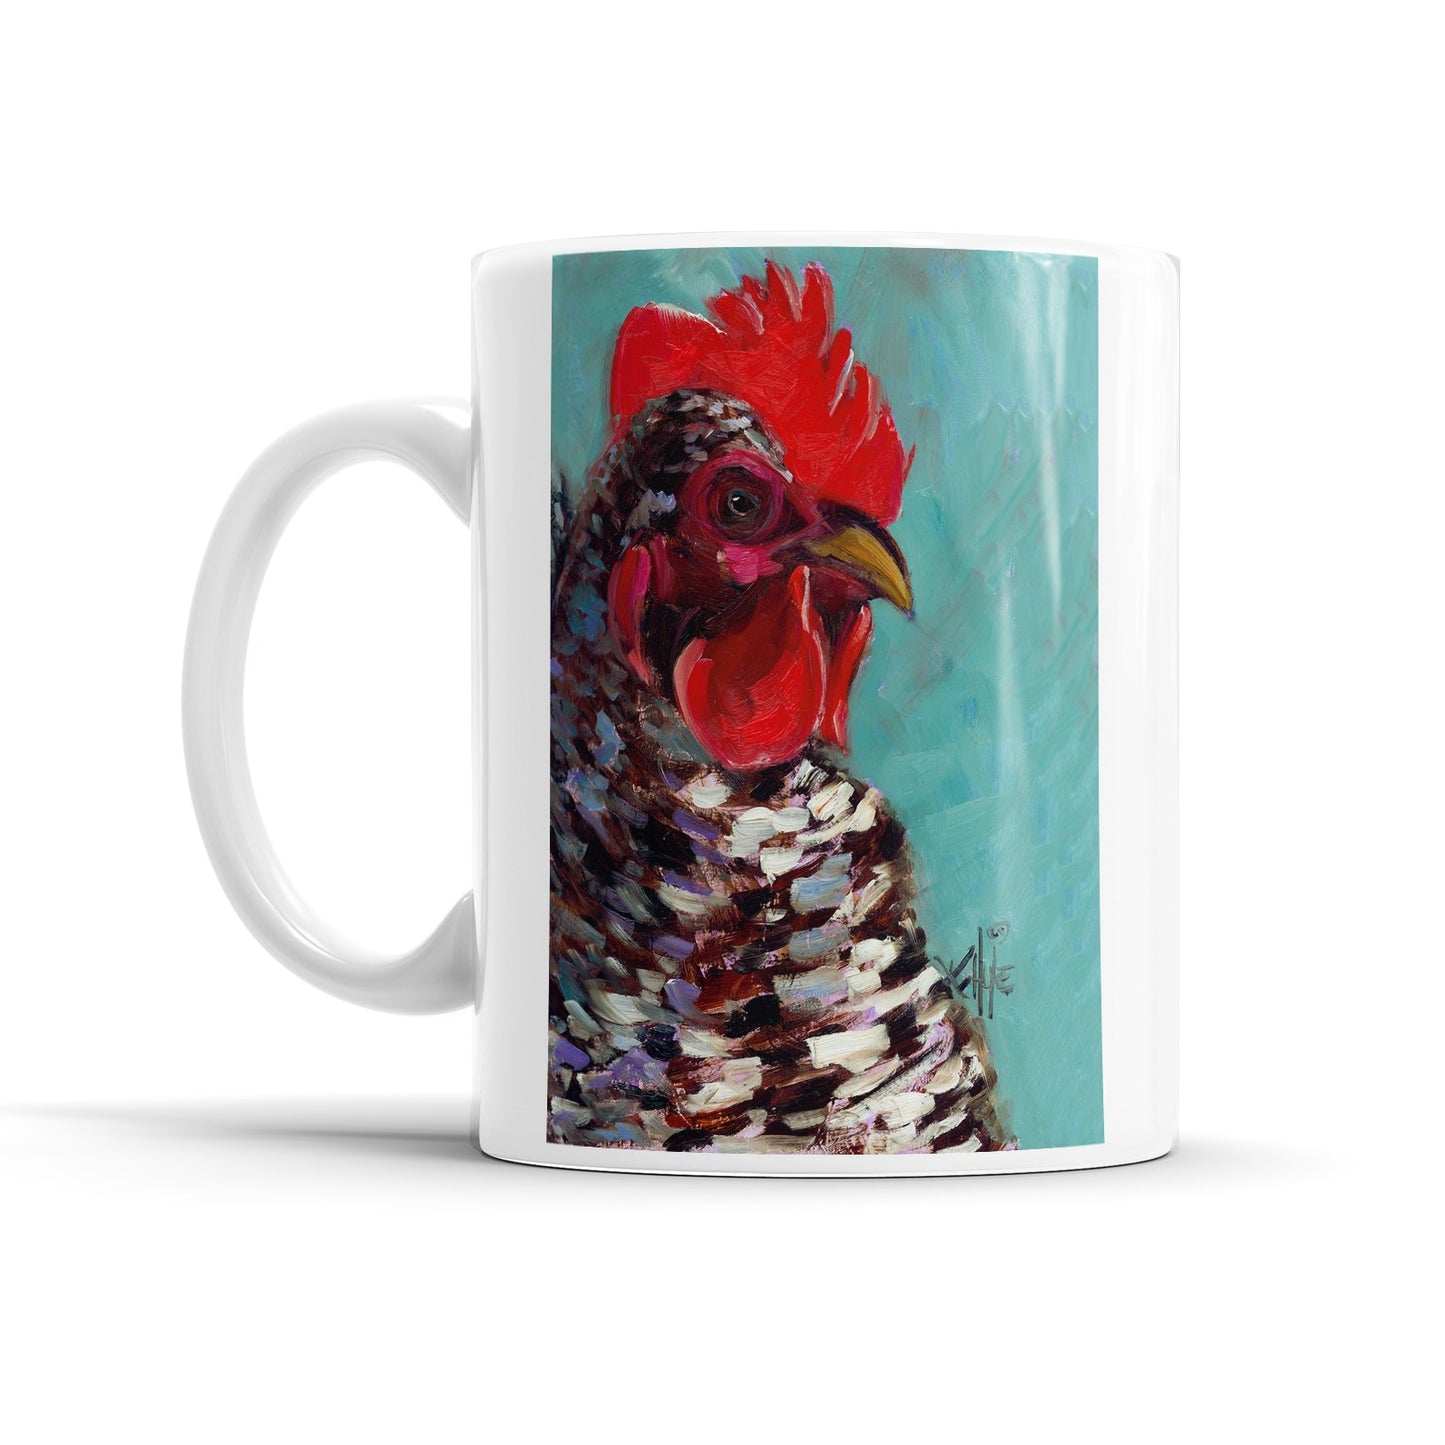 Rooster Mug By K. Huke